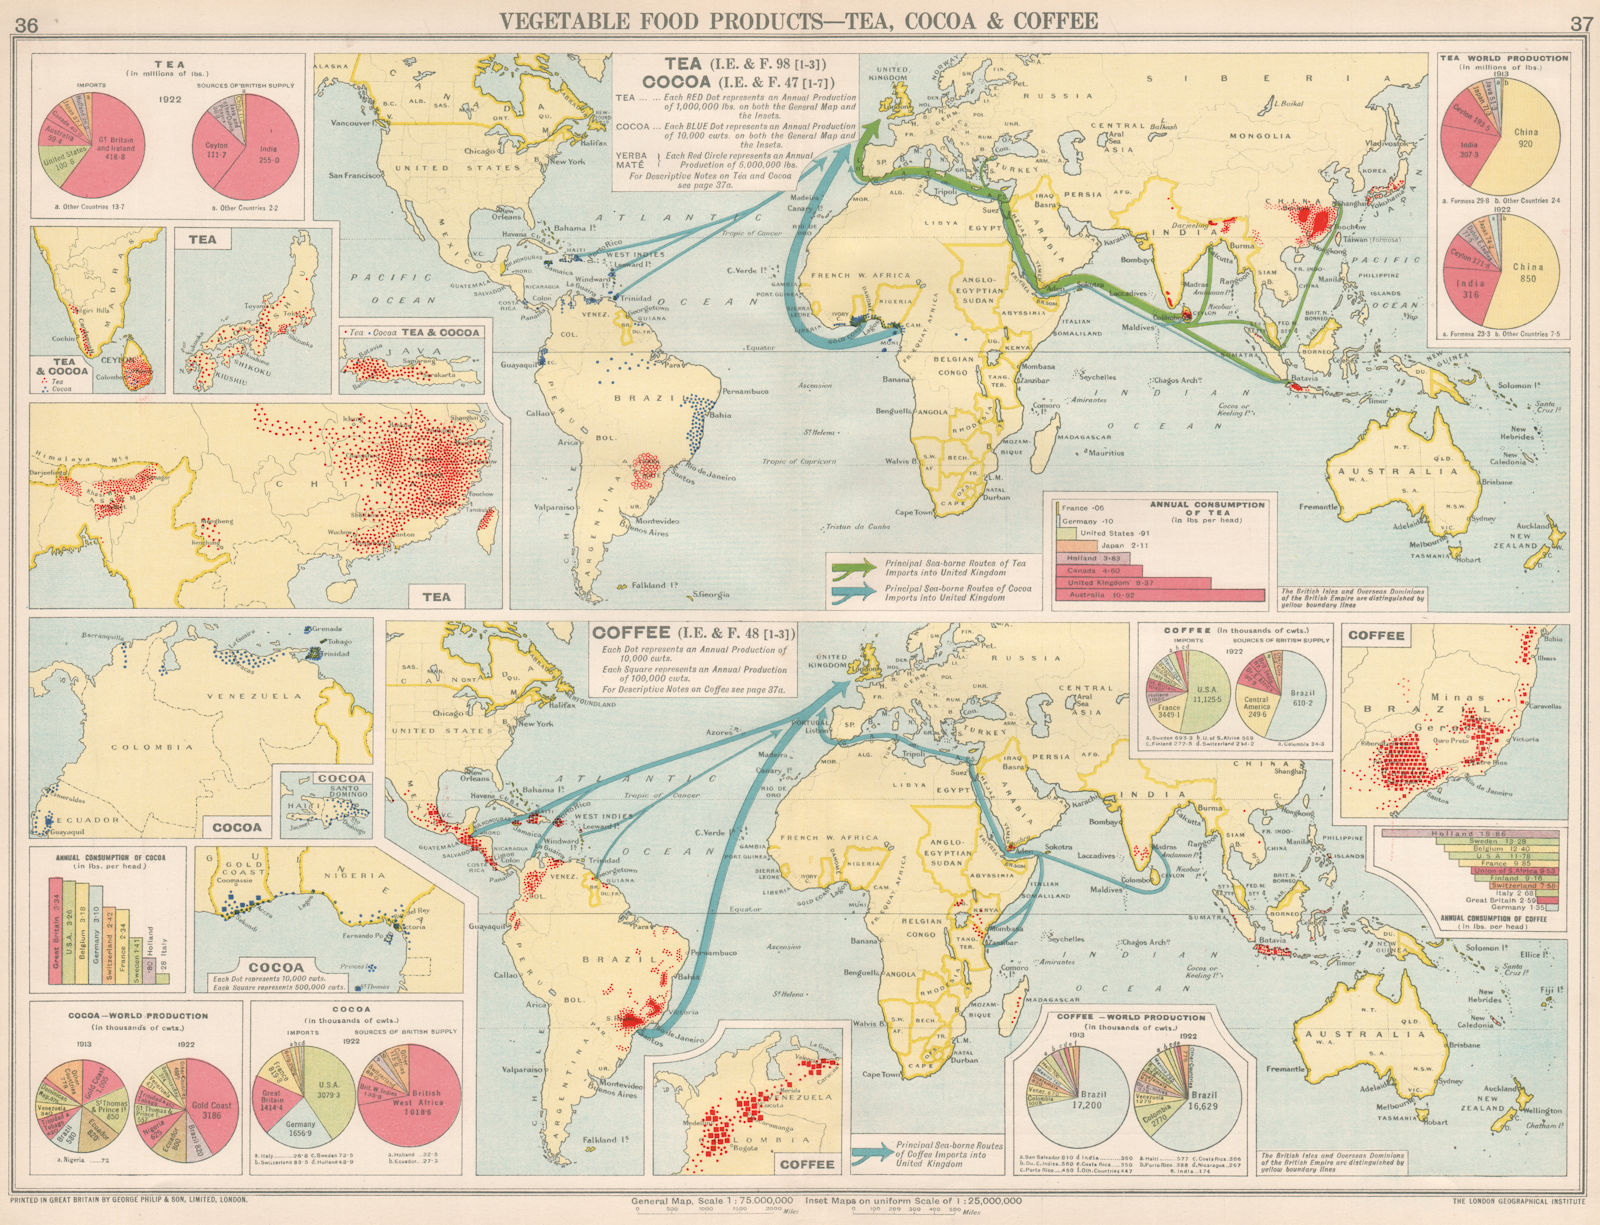 World. Food Production. Tea, Cocoa & Coffee. China & South America 1925 map